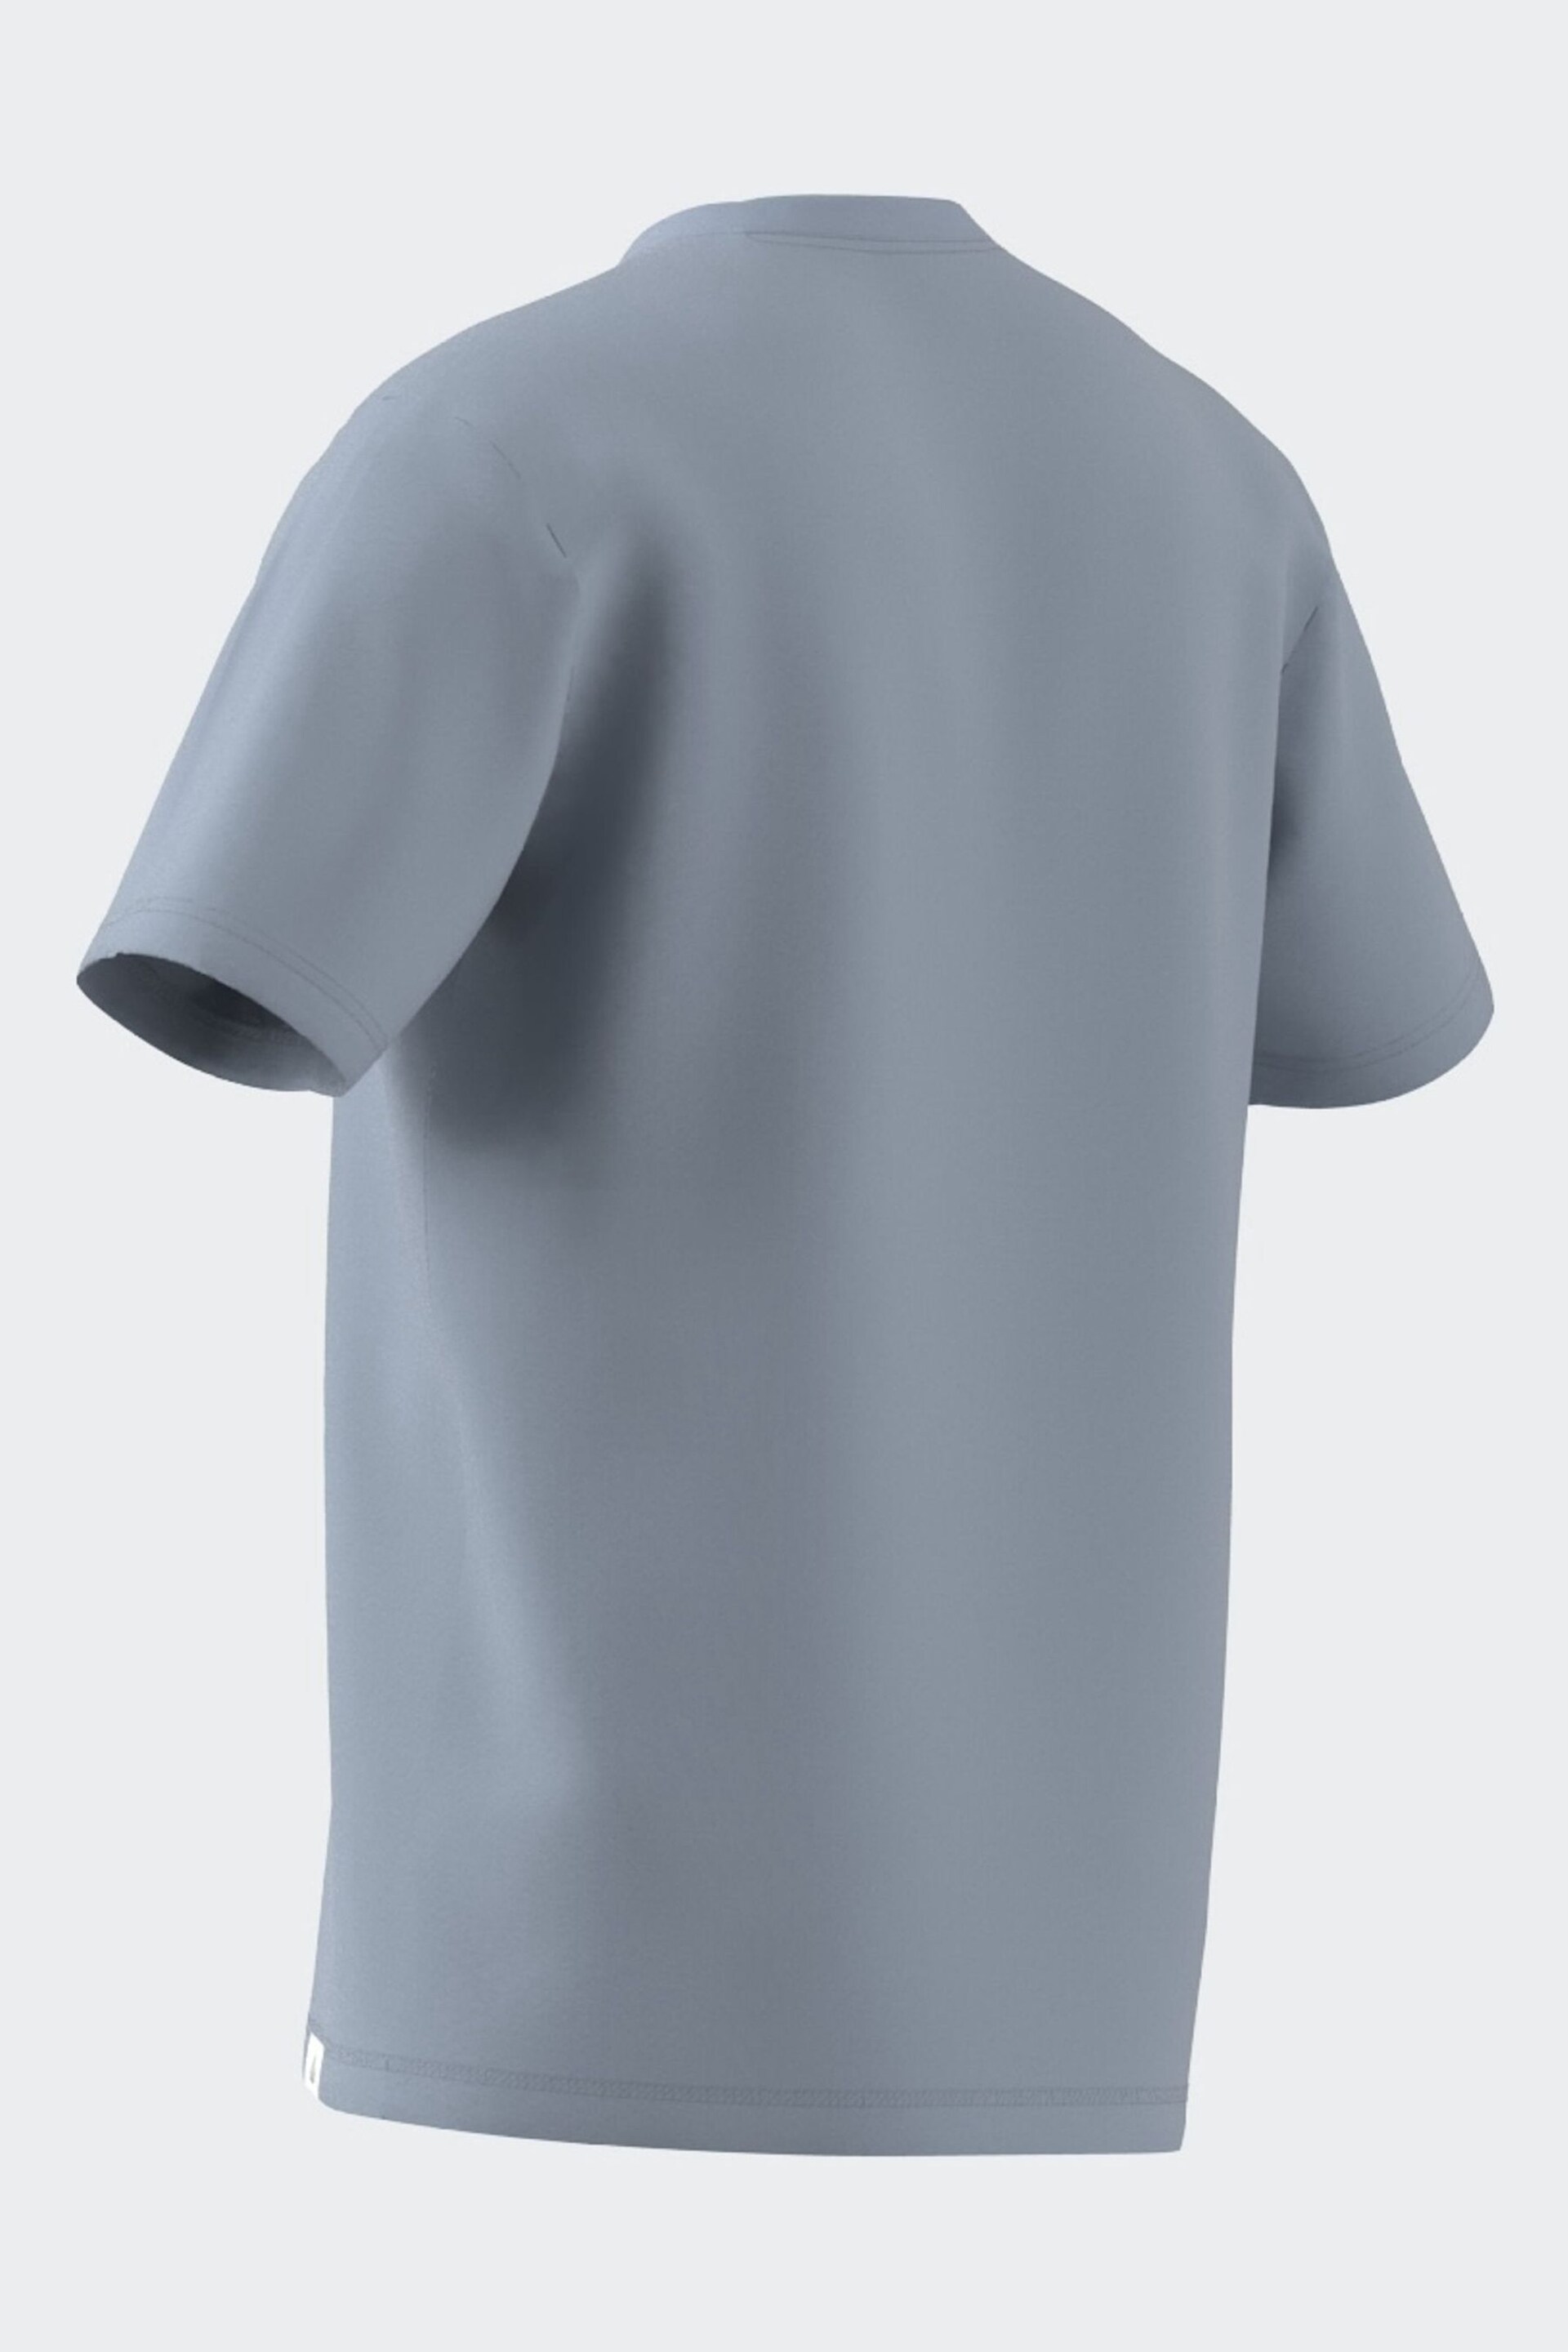 adidas Blue Multi Logo Graphic T-Shirt - Image 4 of 9